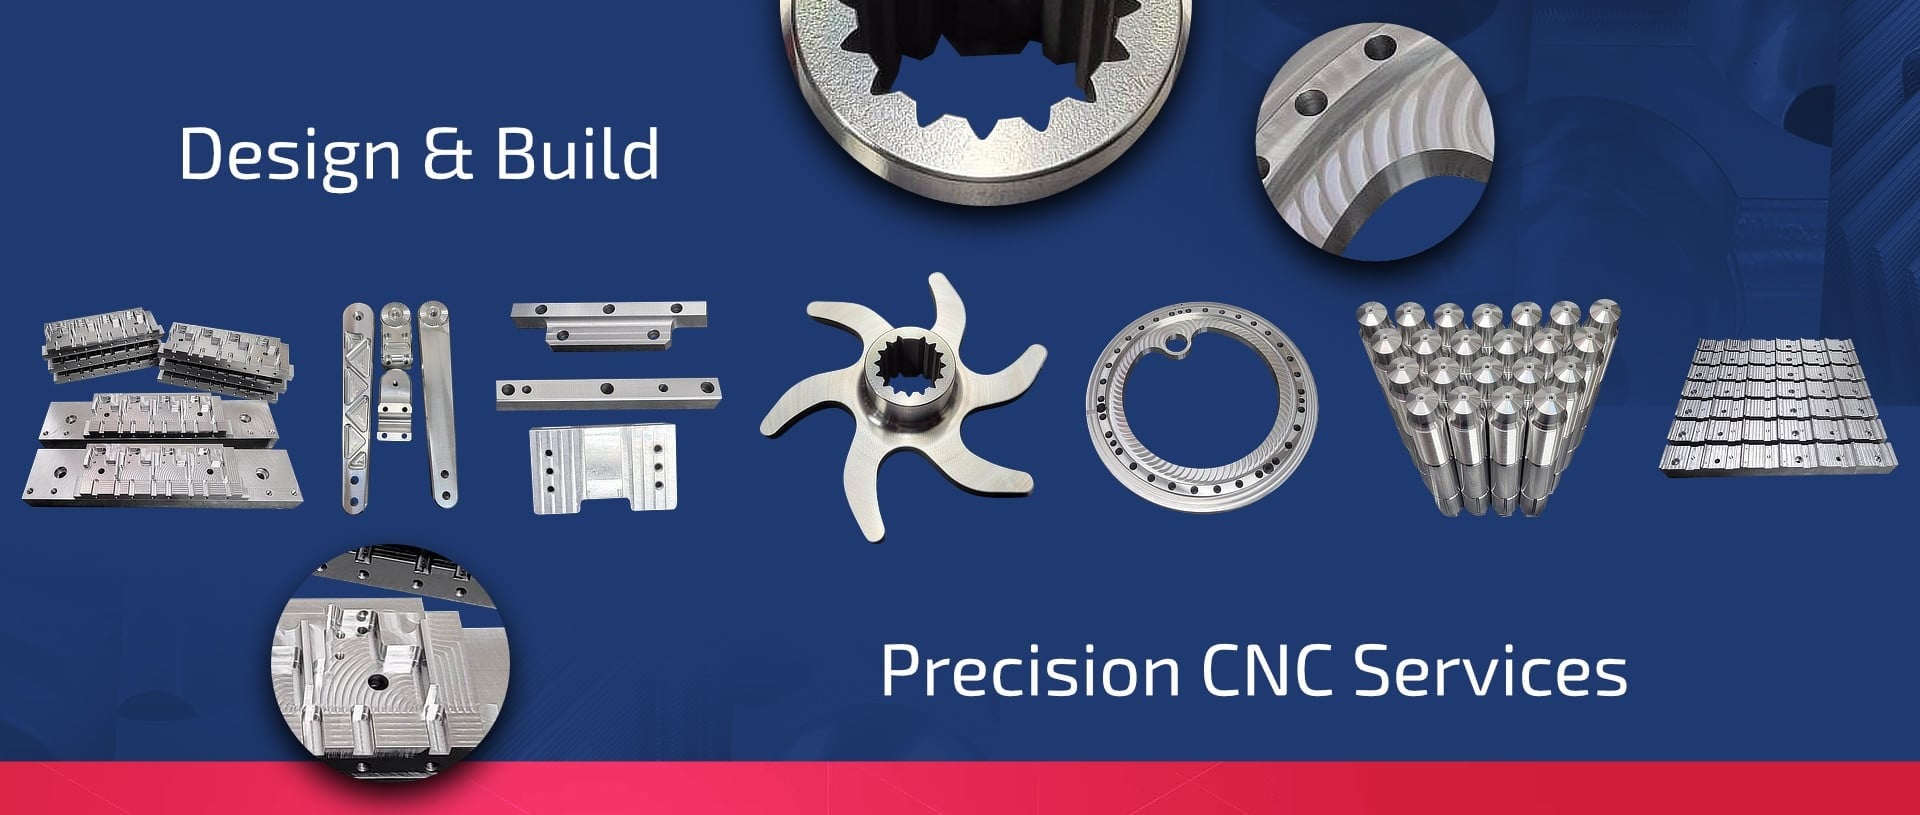  Design and build - precision cnc services